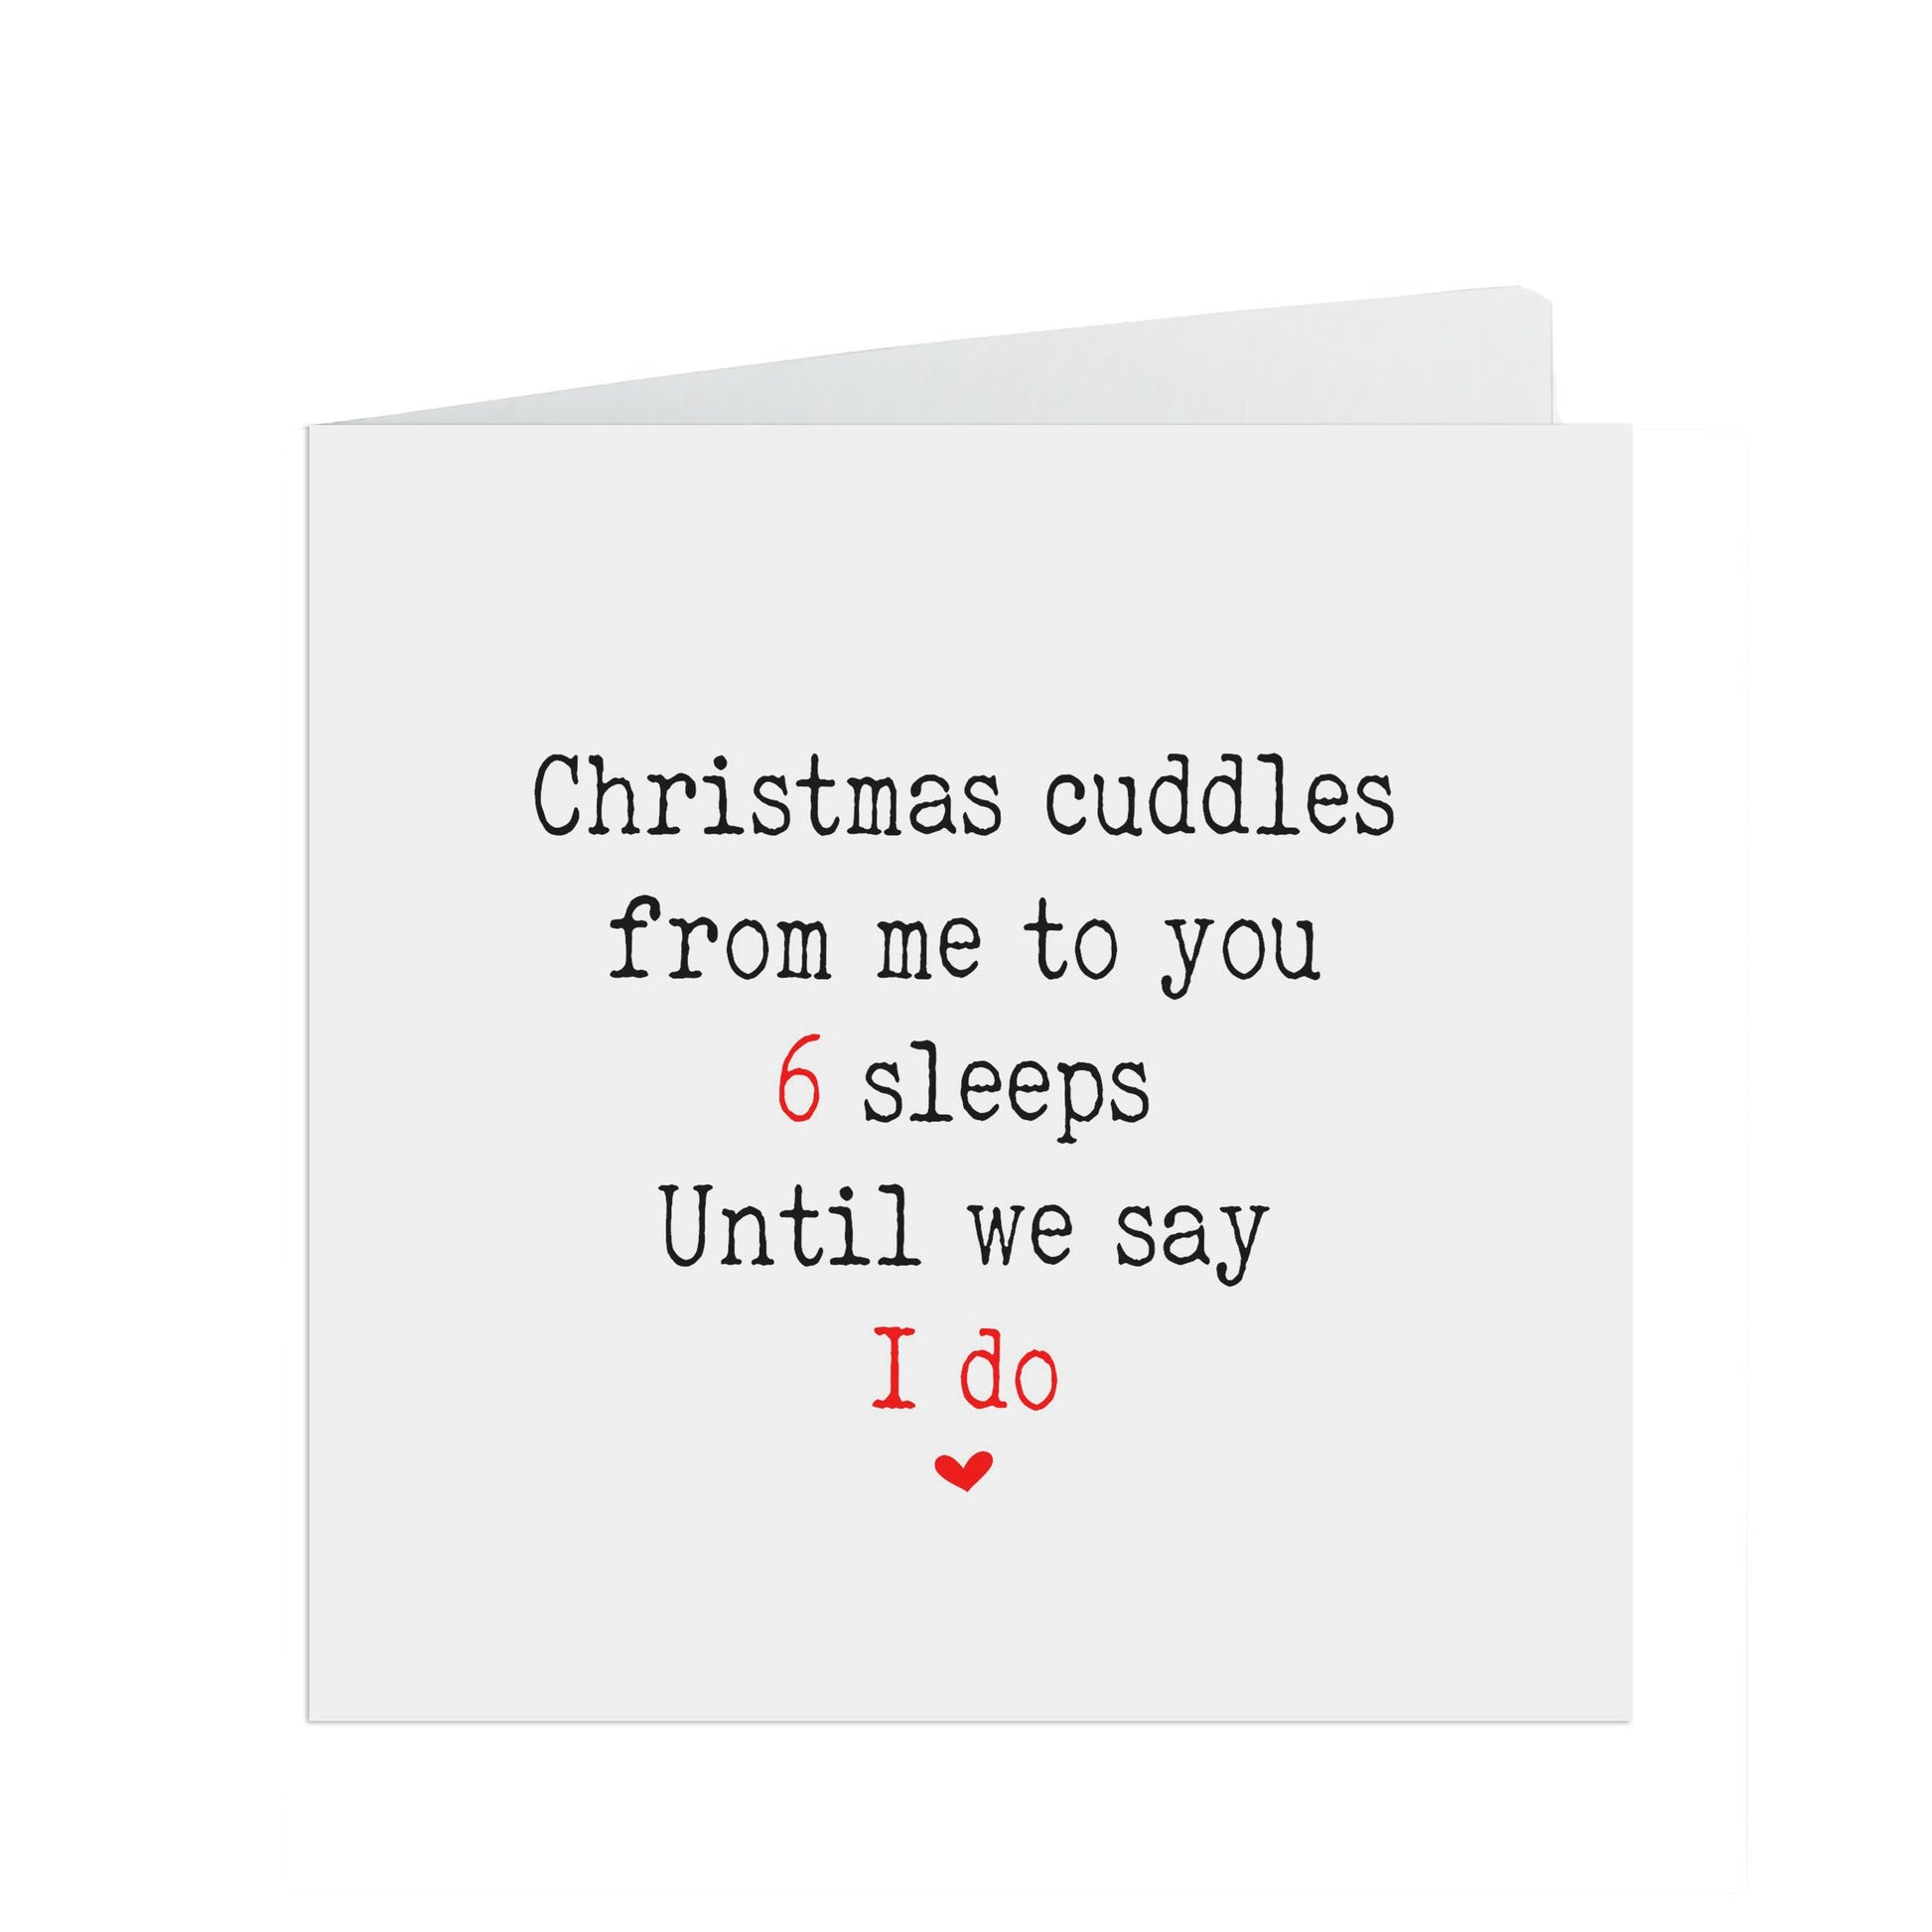 Until We Say I do, Cute Christmas Card For Fiancée Or Fiancé